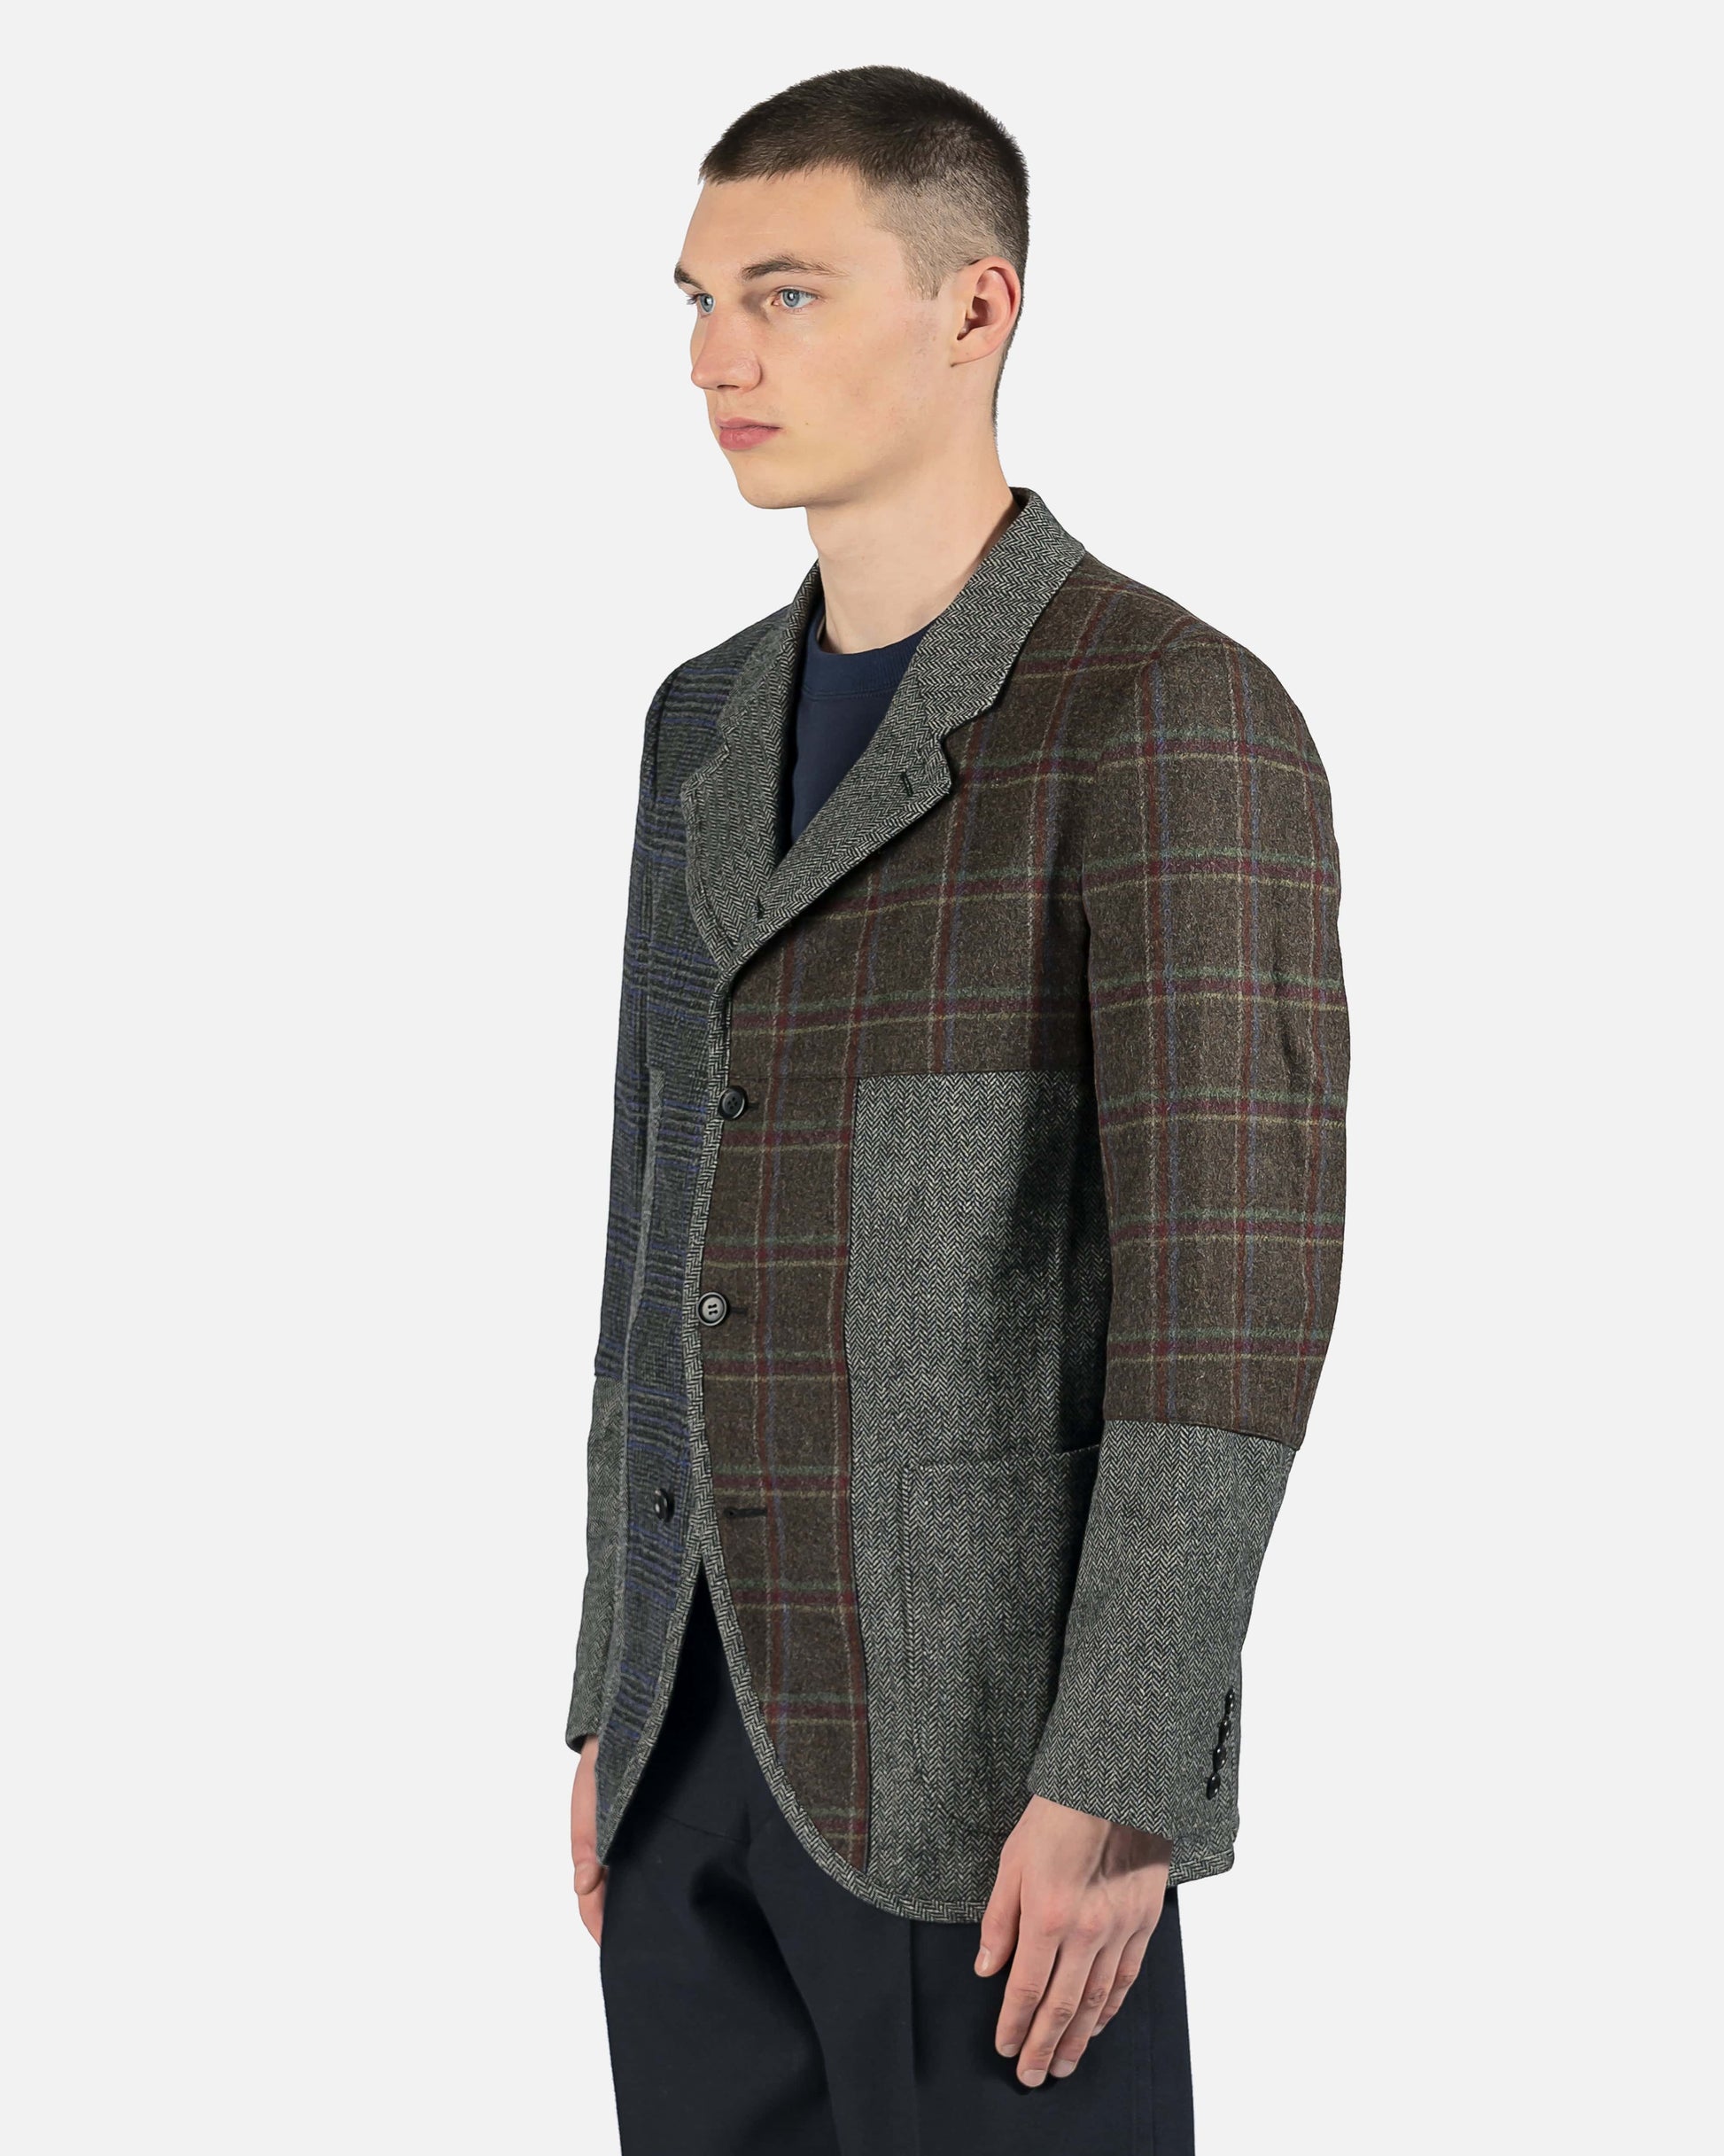 Comme des Garcons Homme Deux Men's Jackets Patchwork Wool Blazer in Multi